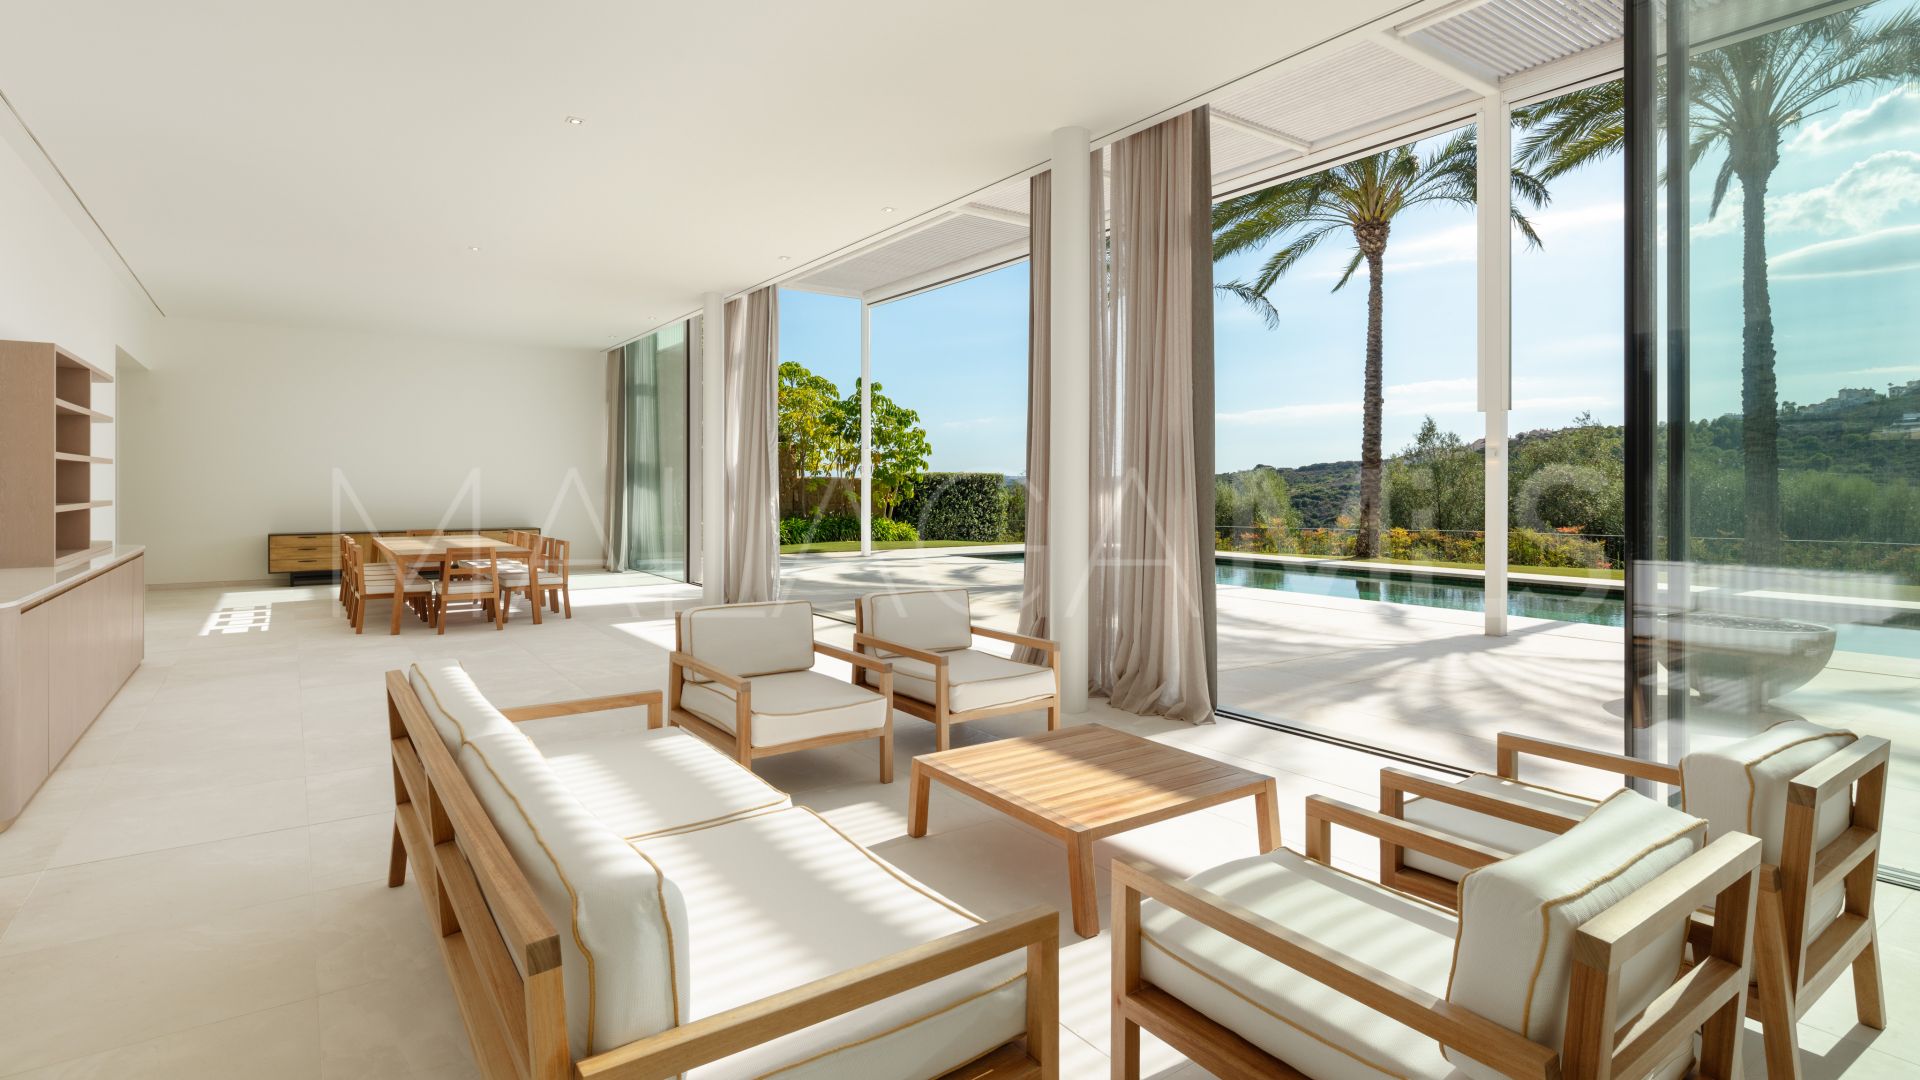 4 bedrooms Finca Cortesin villa for sale